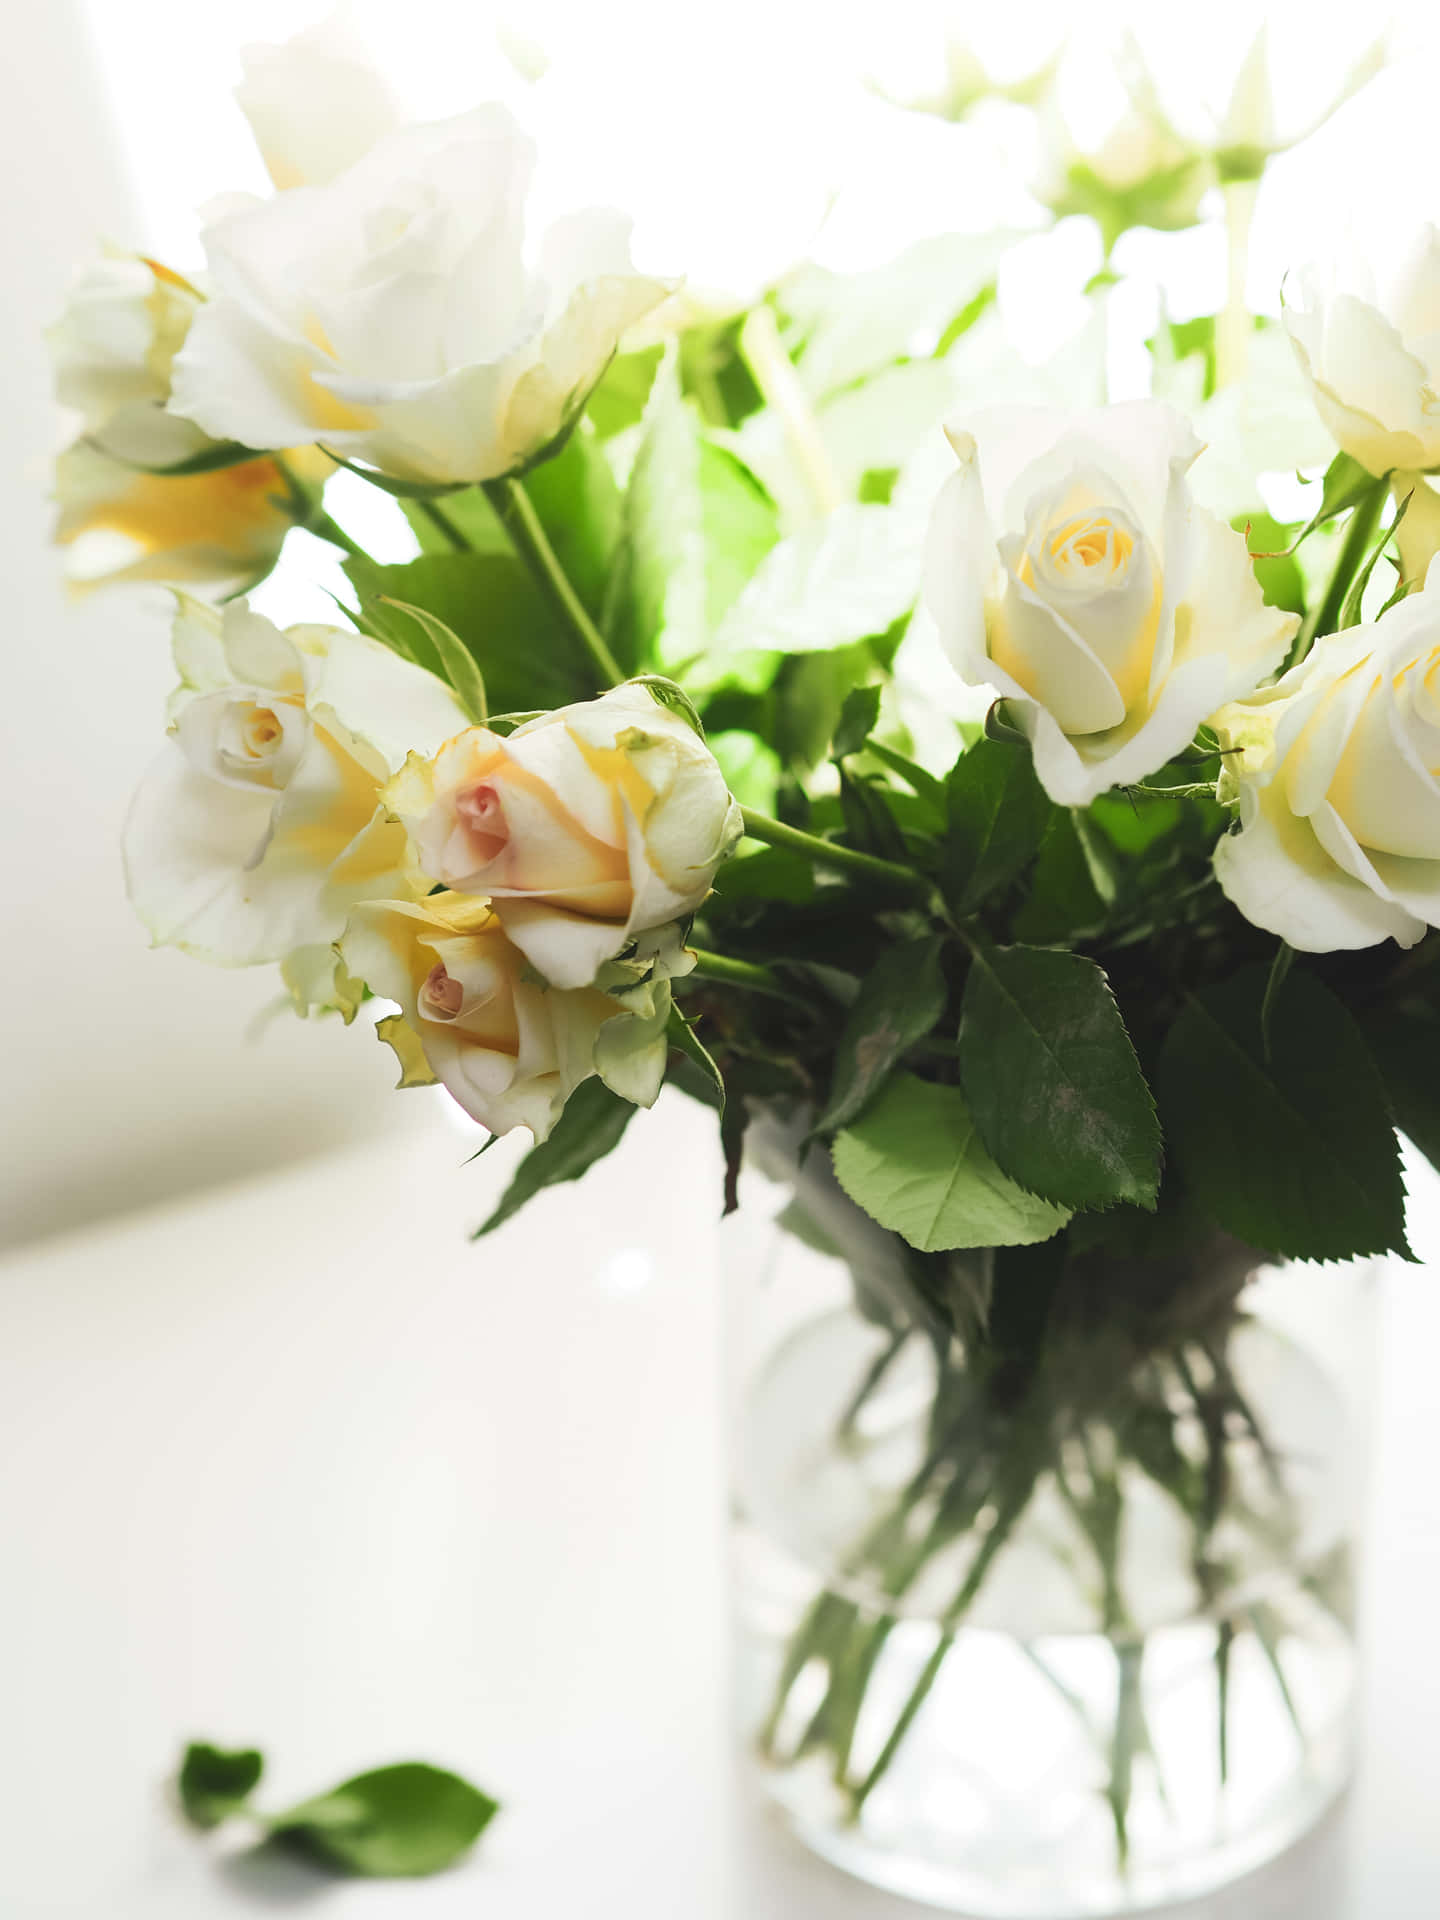 Portrait White Roses And Flower Vase Background